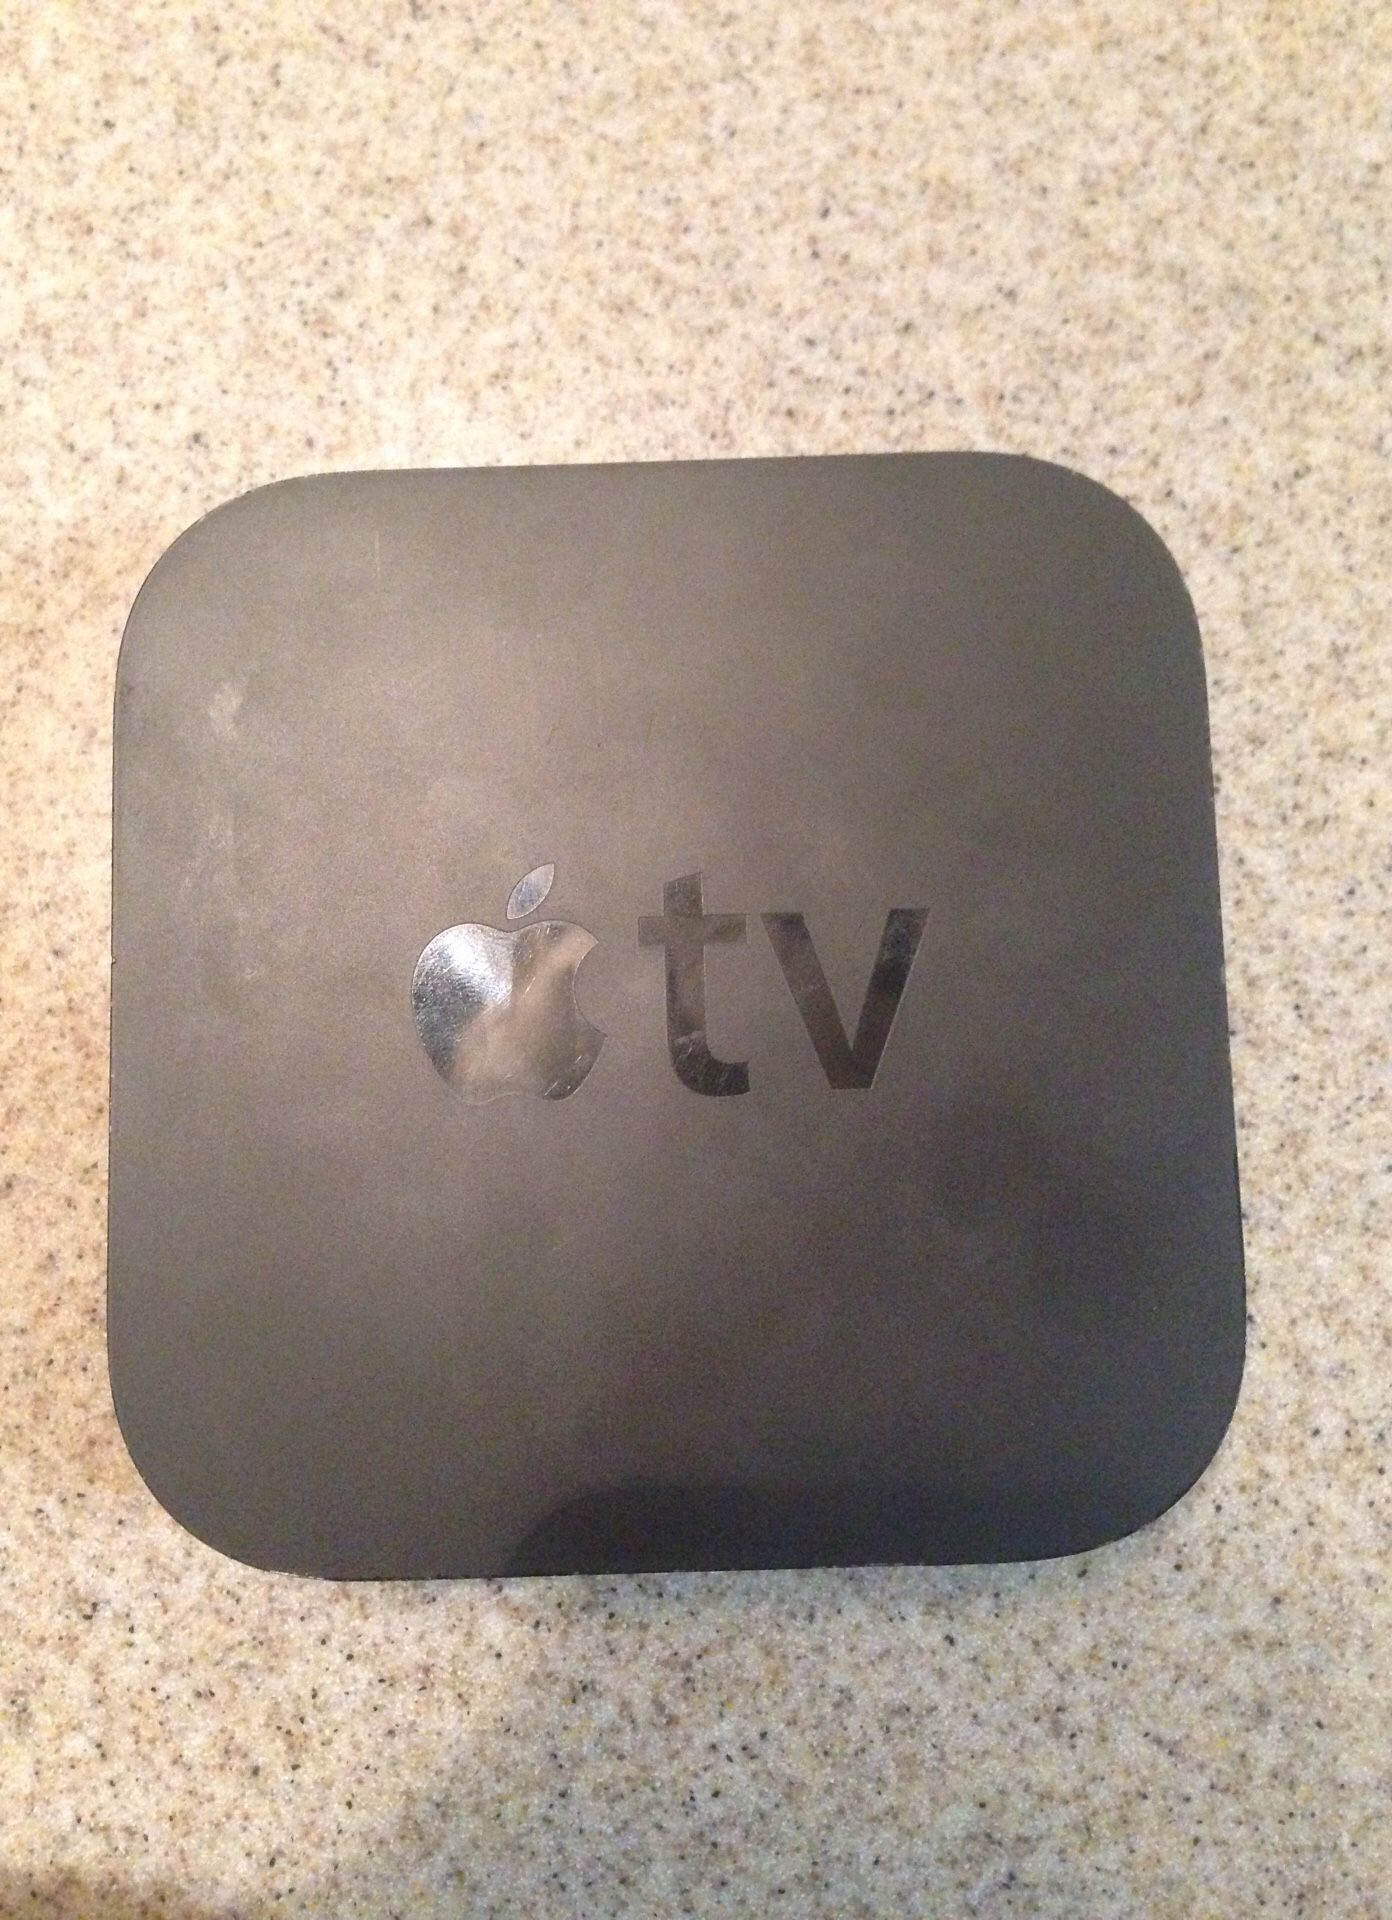 Apple TV 2